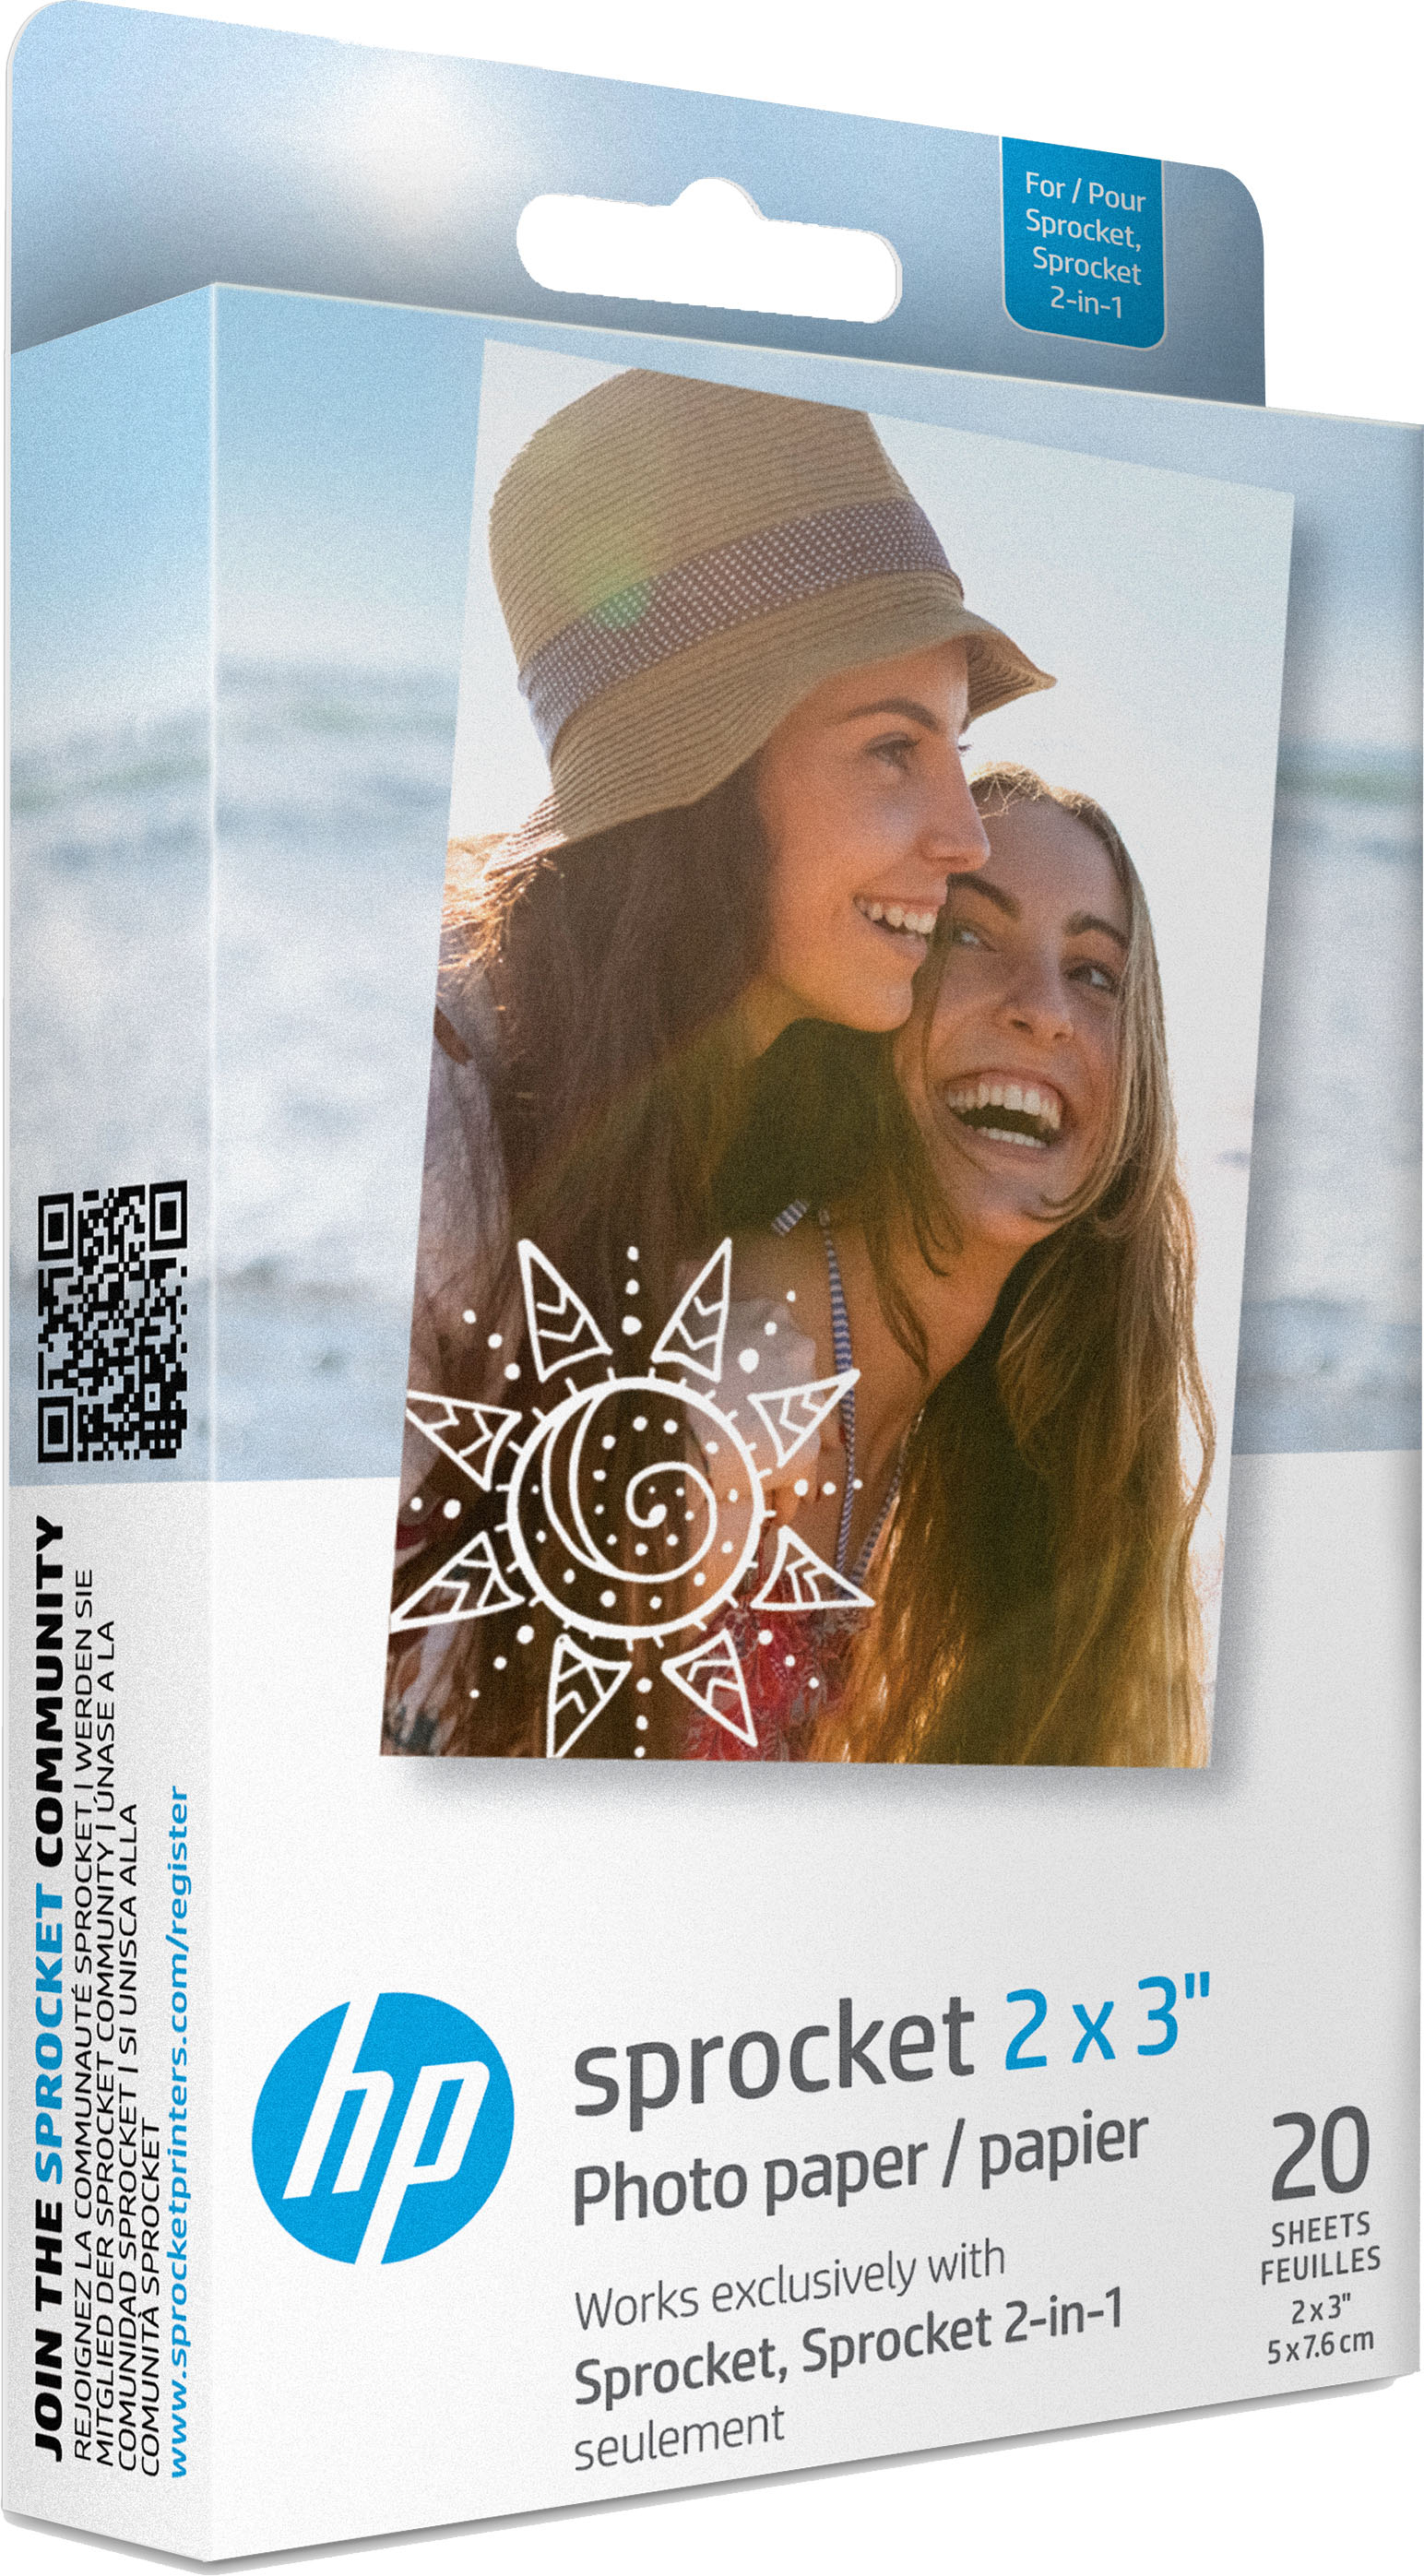 HP Sprocket 2x3" Zink Photo Paper (20 Sheets) - Gloss Finish